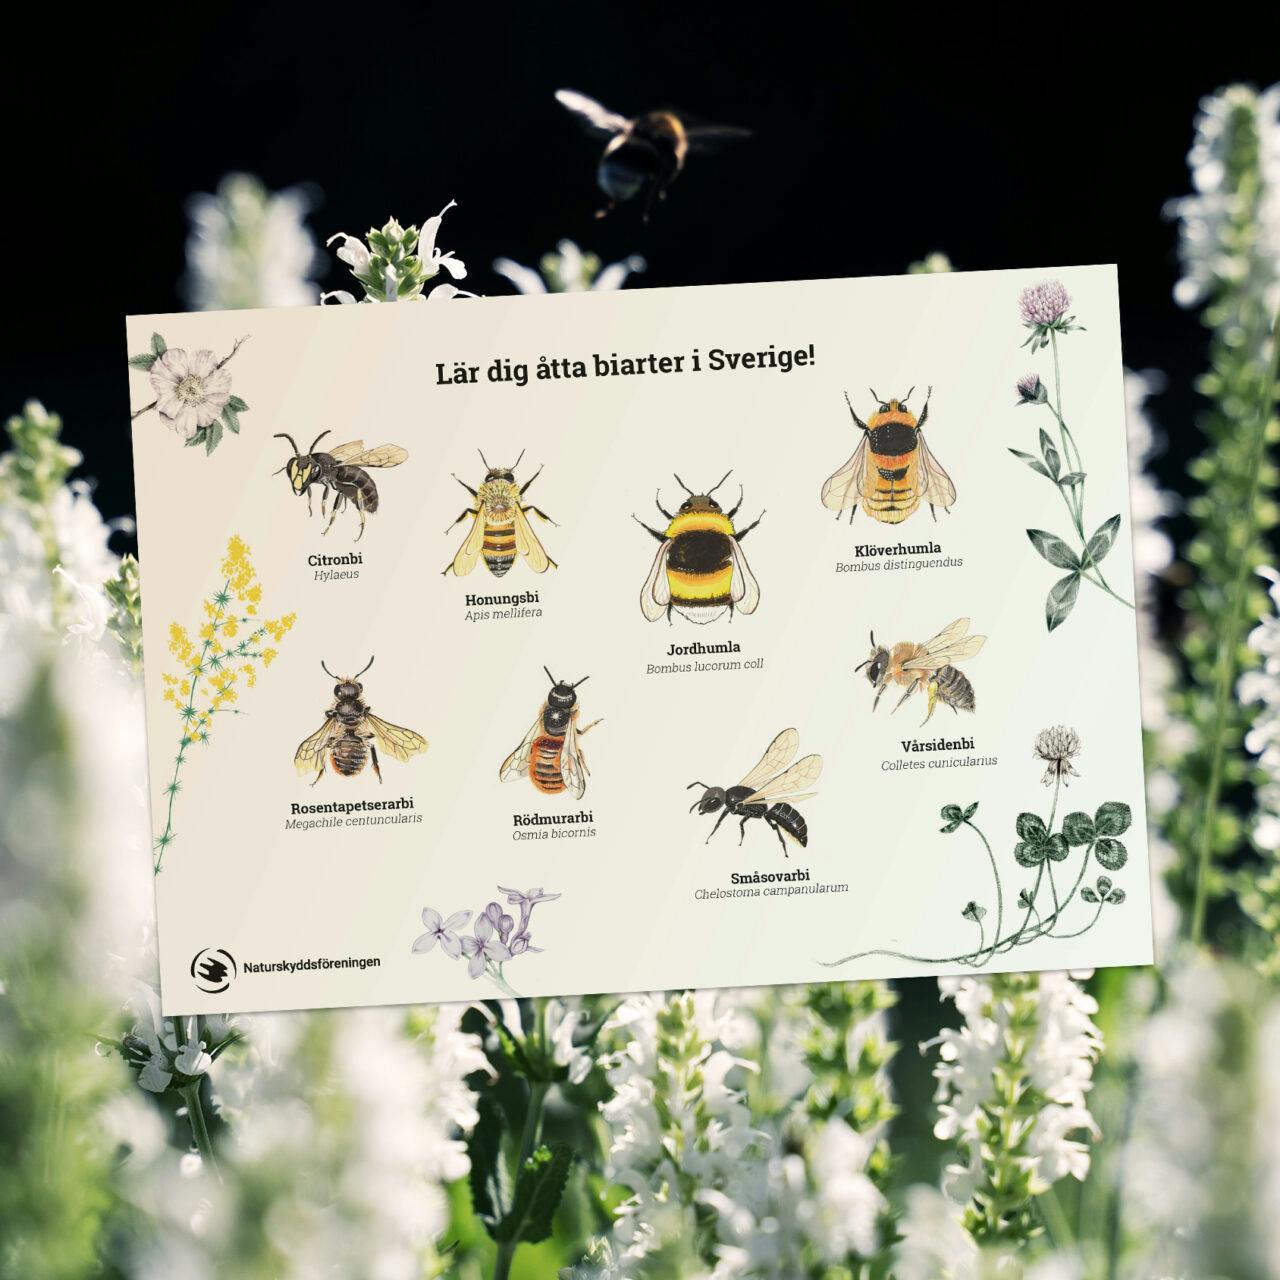 bin, bi, vildbi, vildbin, arter, pollinatör, pollinatörer, svenska